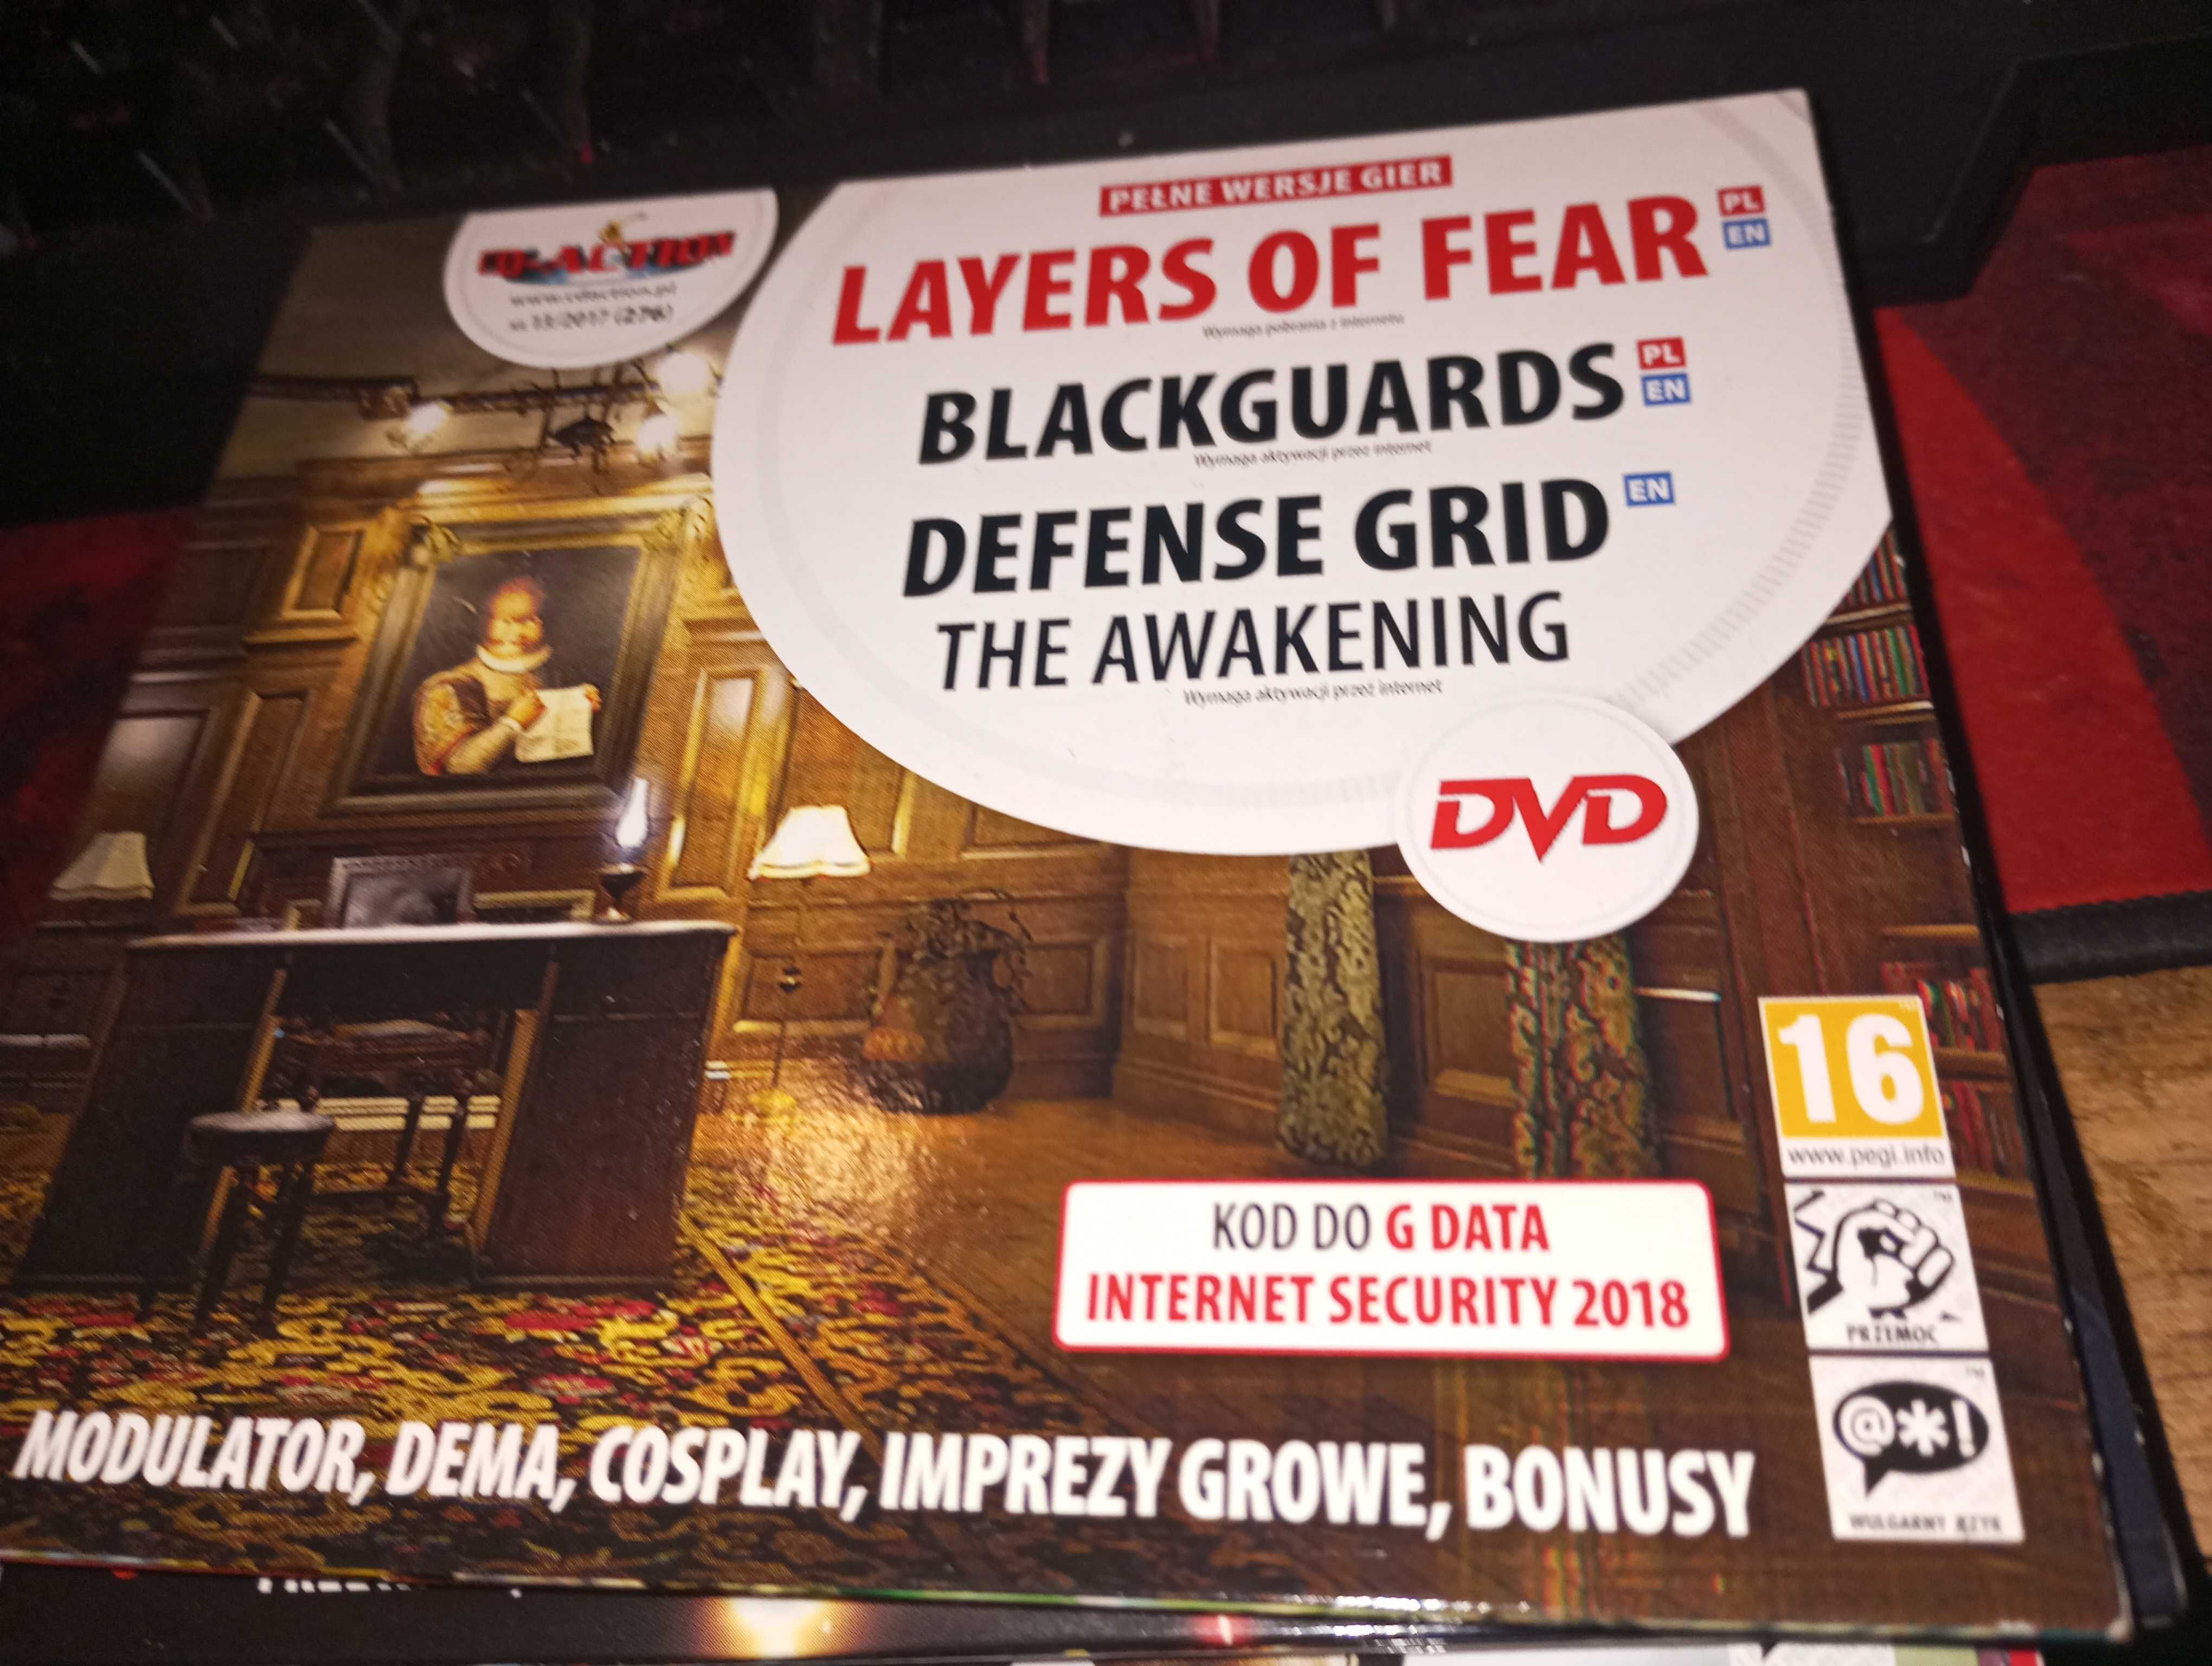 CD-ACTION 13/2017 #276 KOLEKCJONERKA Layers of Fear PL, Blackguards PL